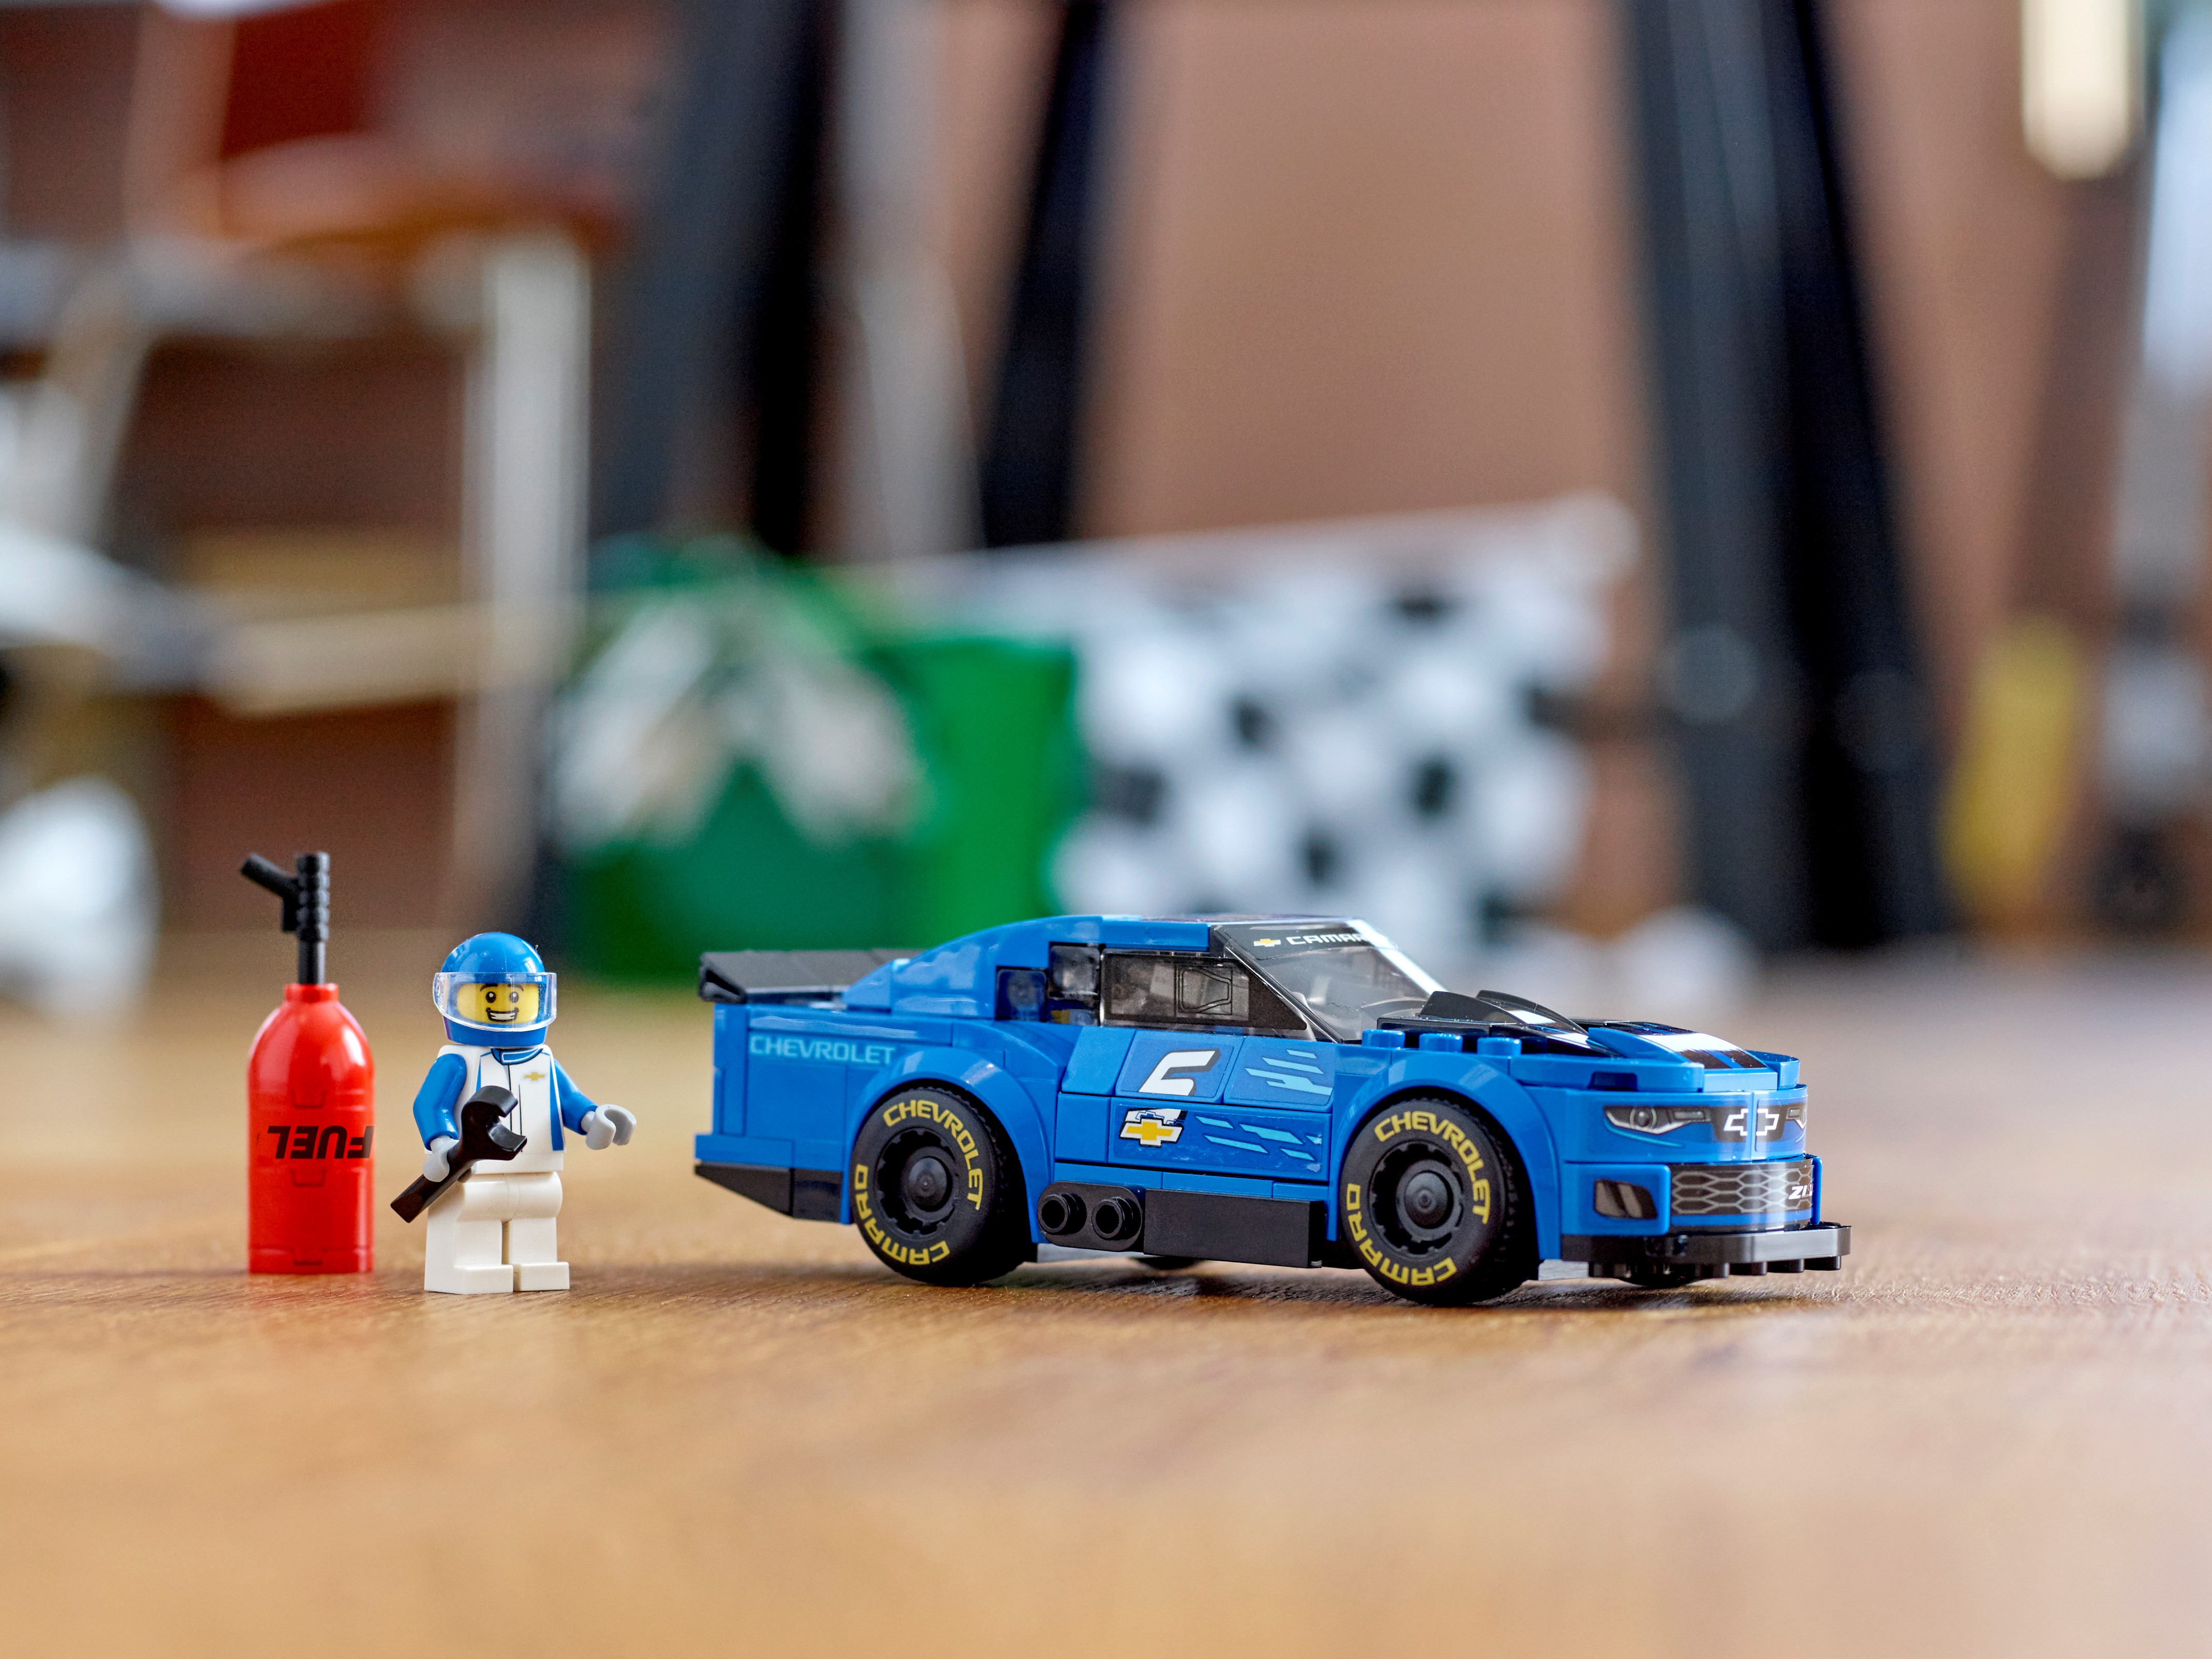 Lego Speed Champions 75891 Chevrolet Camaro ZL1